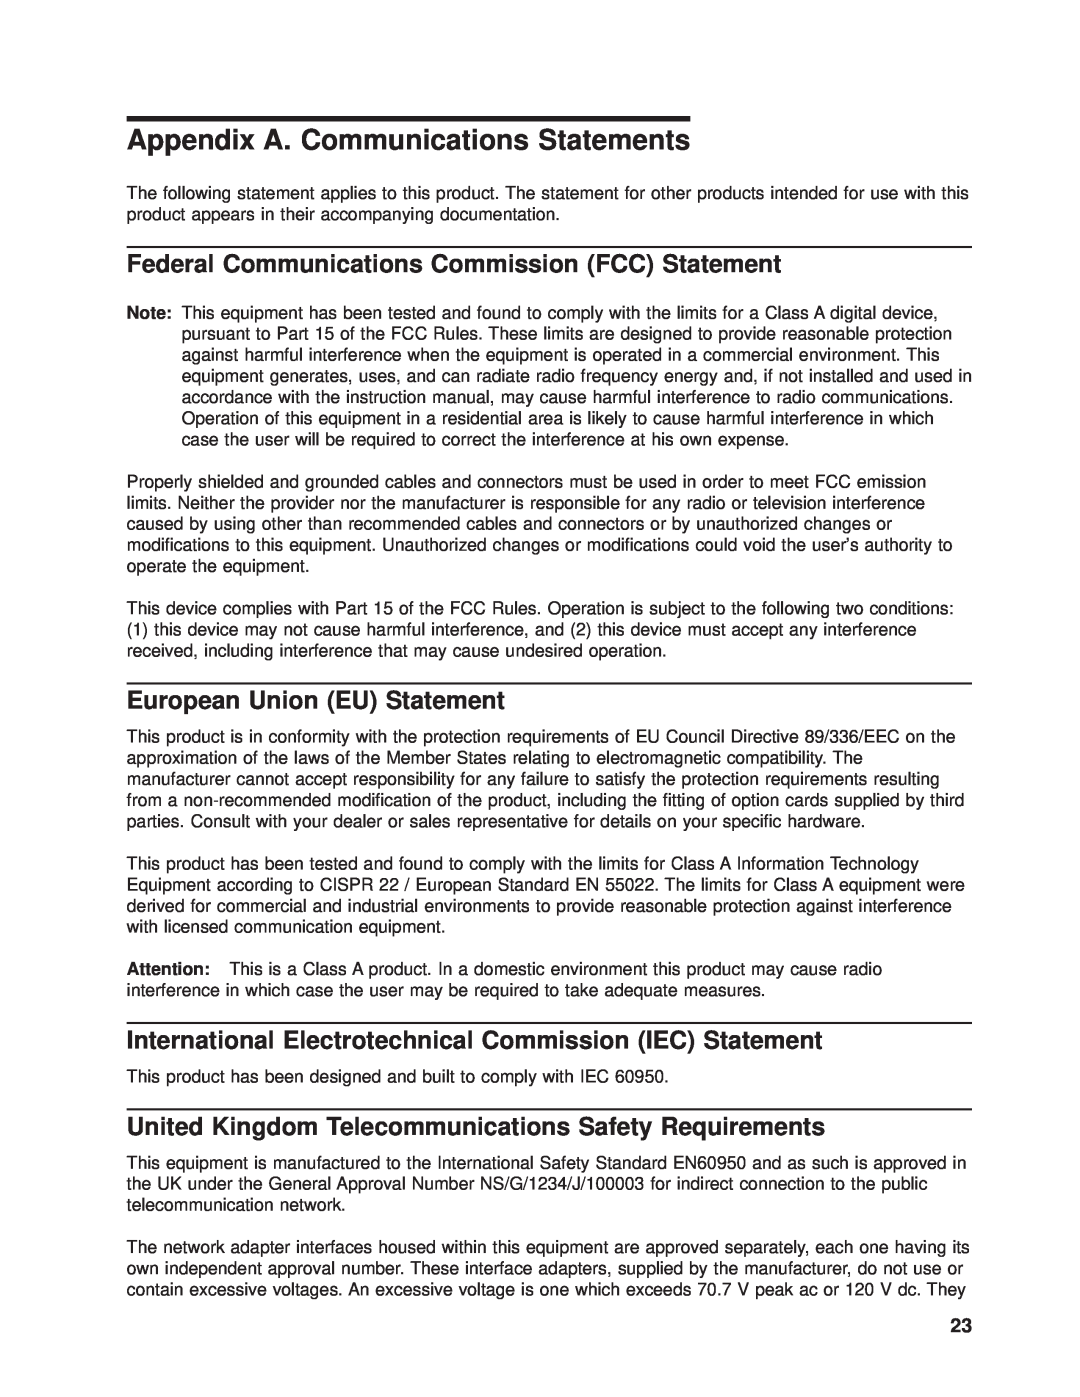 IBM SA23-1325-01 manual Appendix A. Communications Statements, Federal Communications Commission FCC Statement 